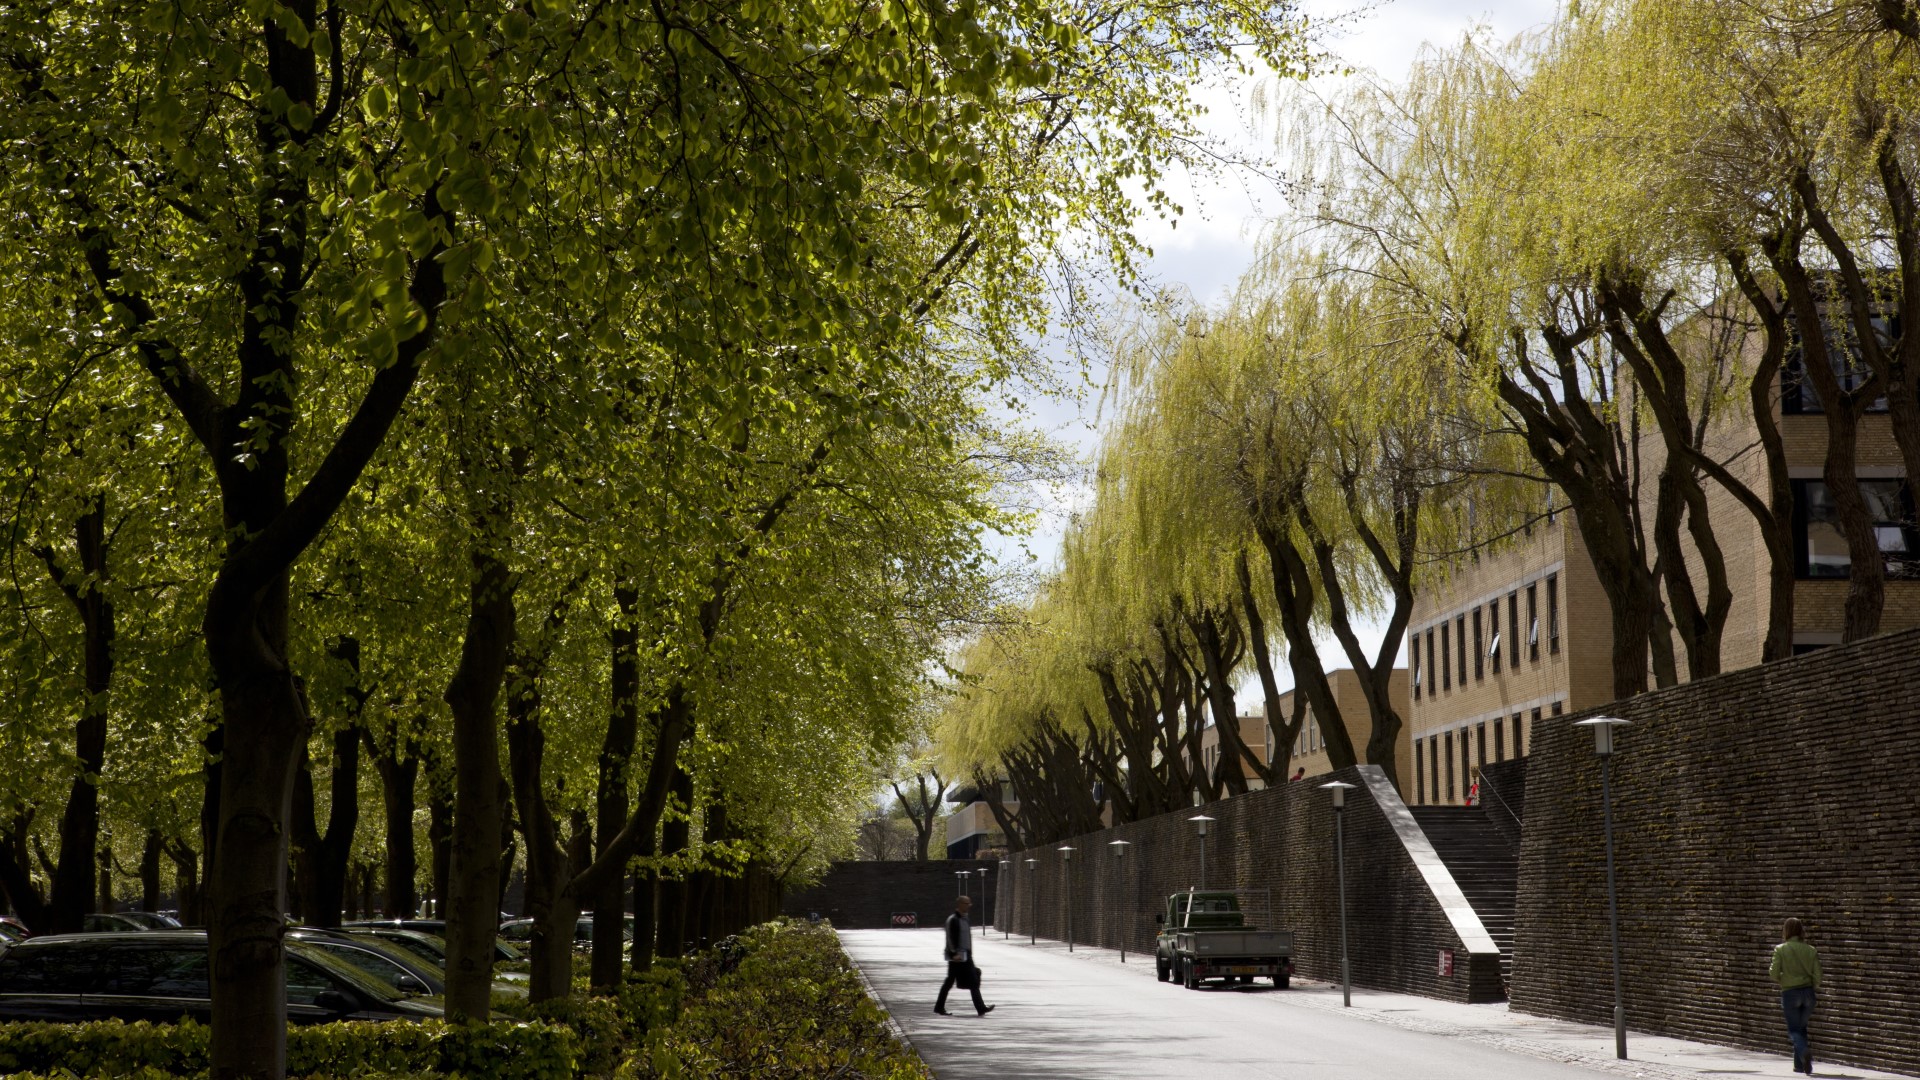 Mature trees line the central avenue that divide the four quadrants that make up DTU's main campus.